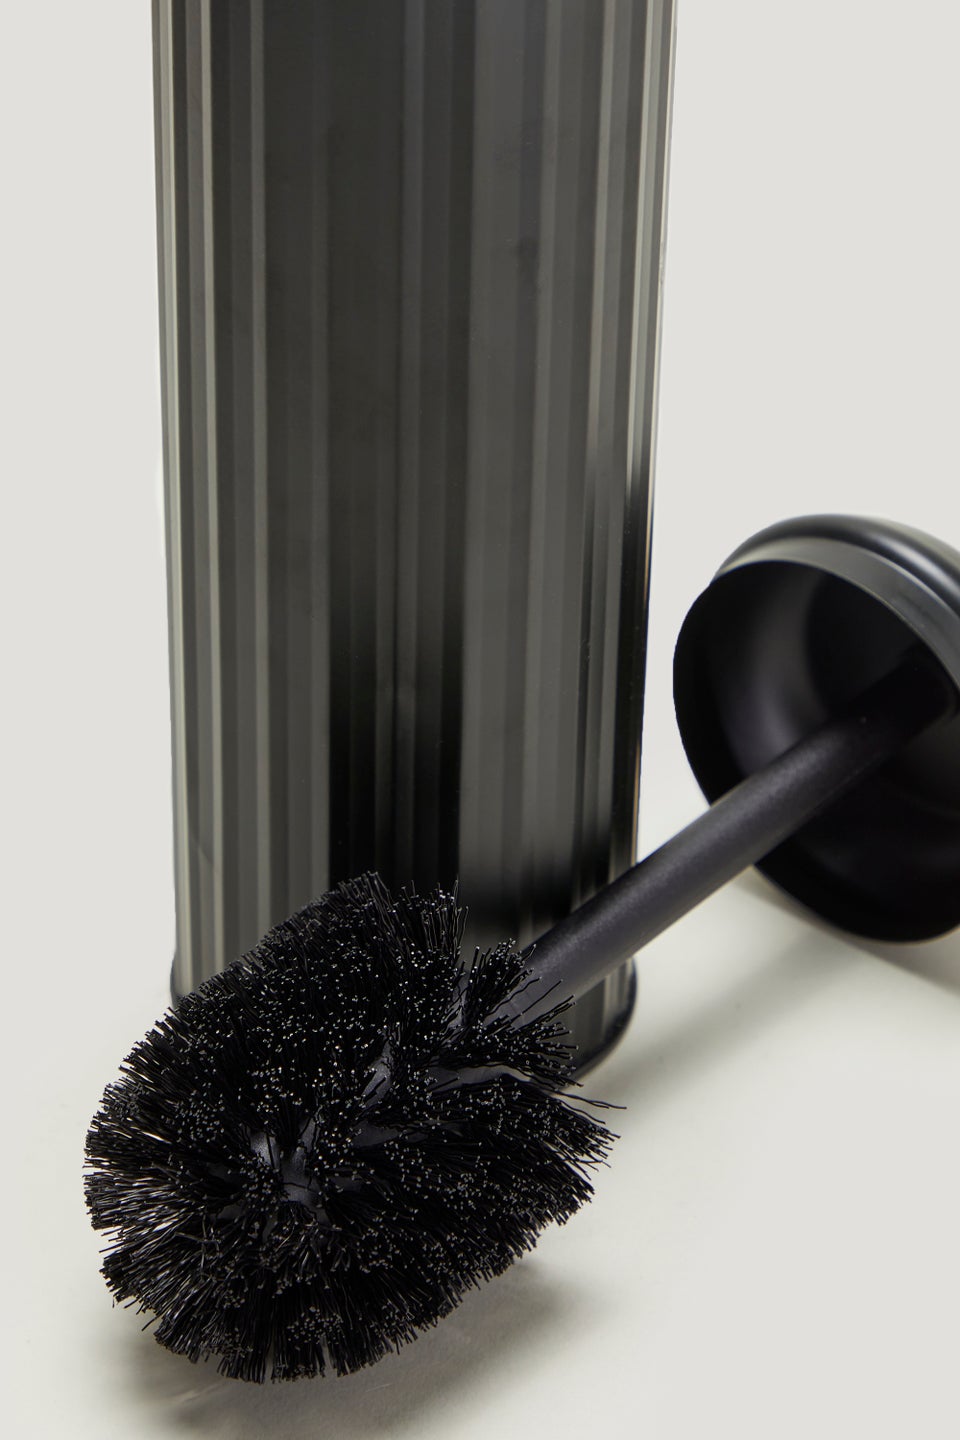 Black Ridged Metal Toilet Brush (41cm x 9cm)